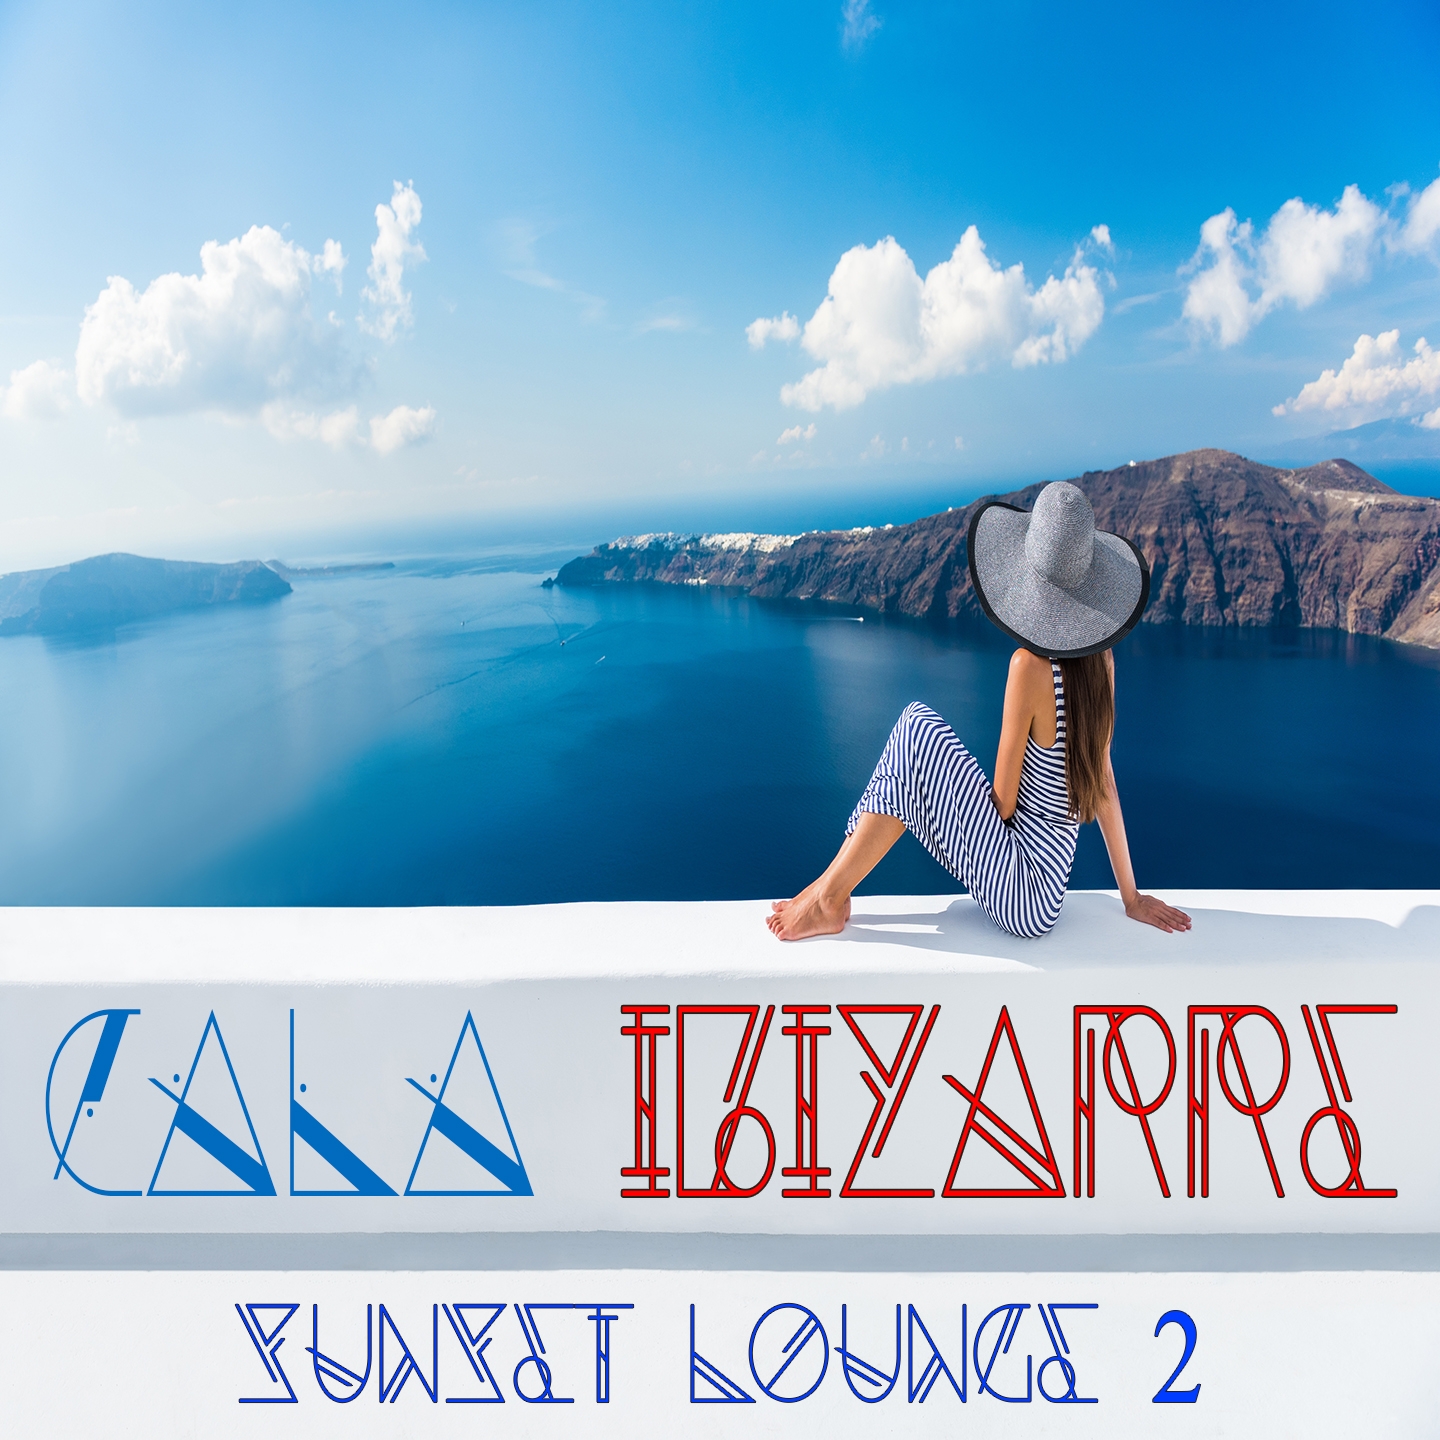 Cala Ibizarre, Sunset Lounge Vol.2